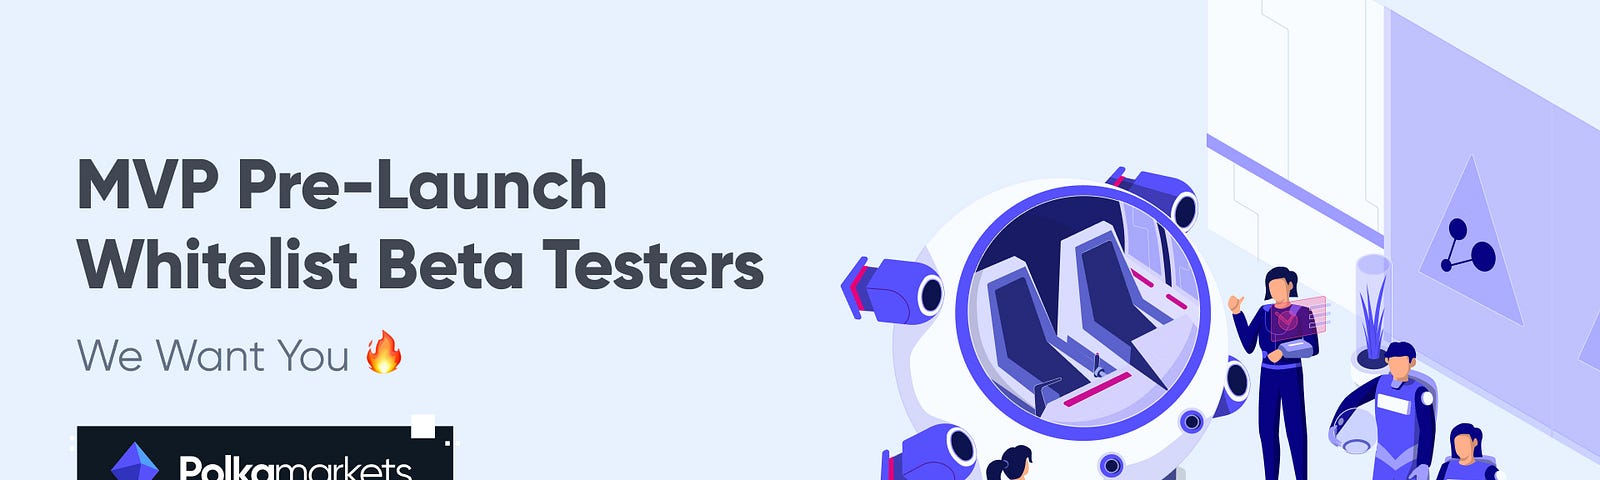 MVP Pre-Launch Whitelist Beta Testers